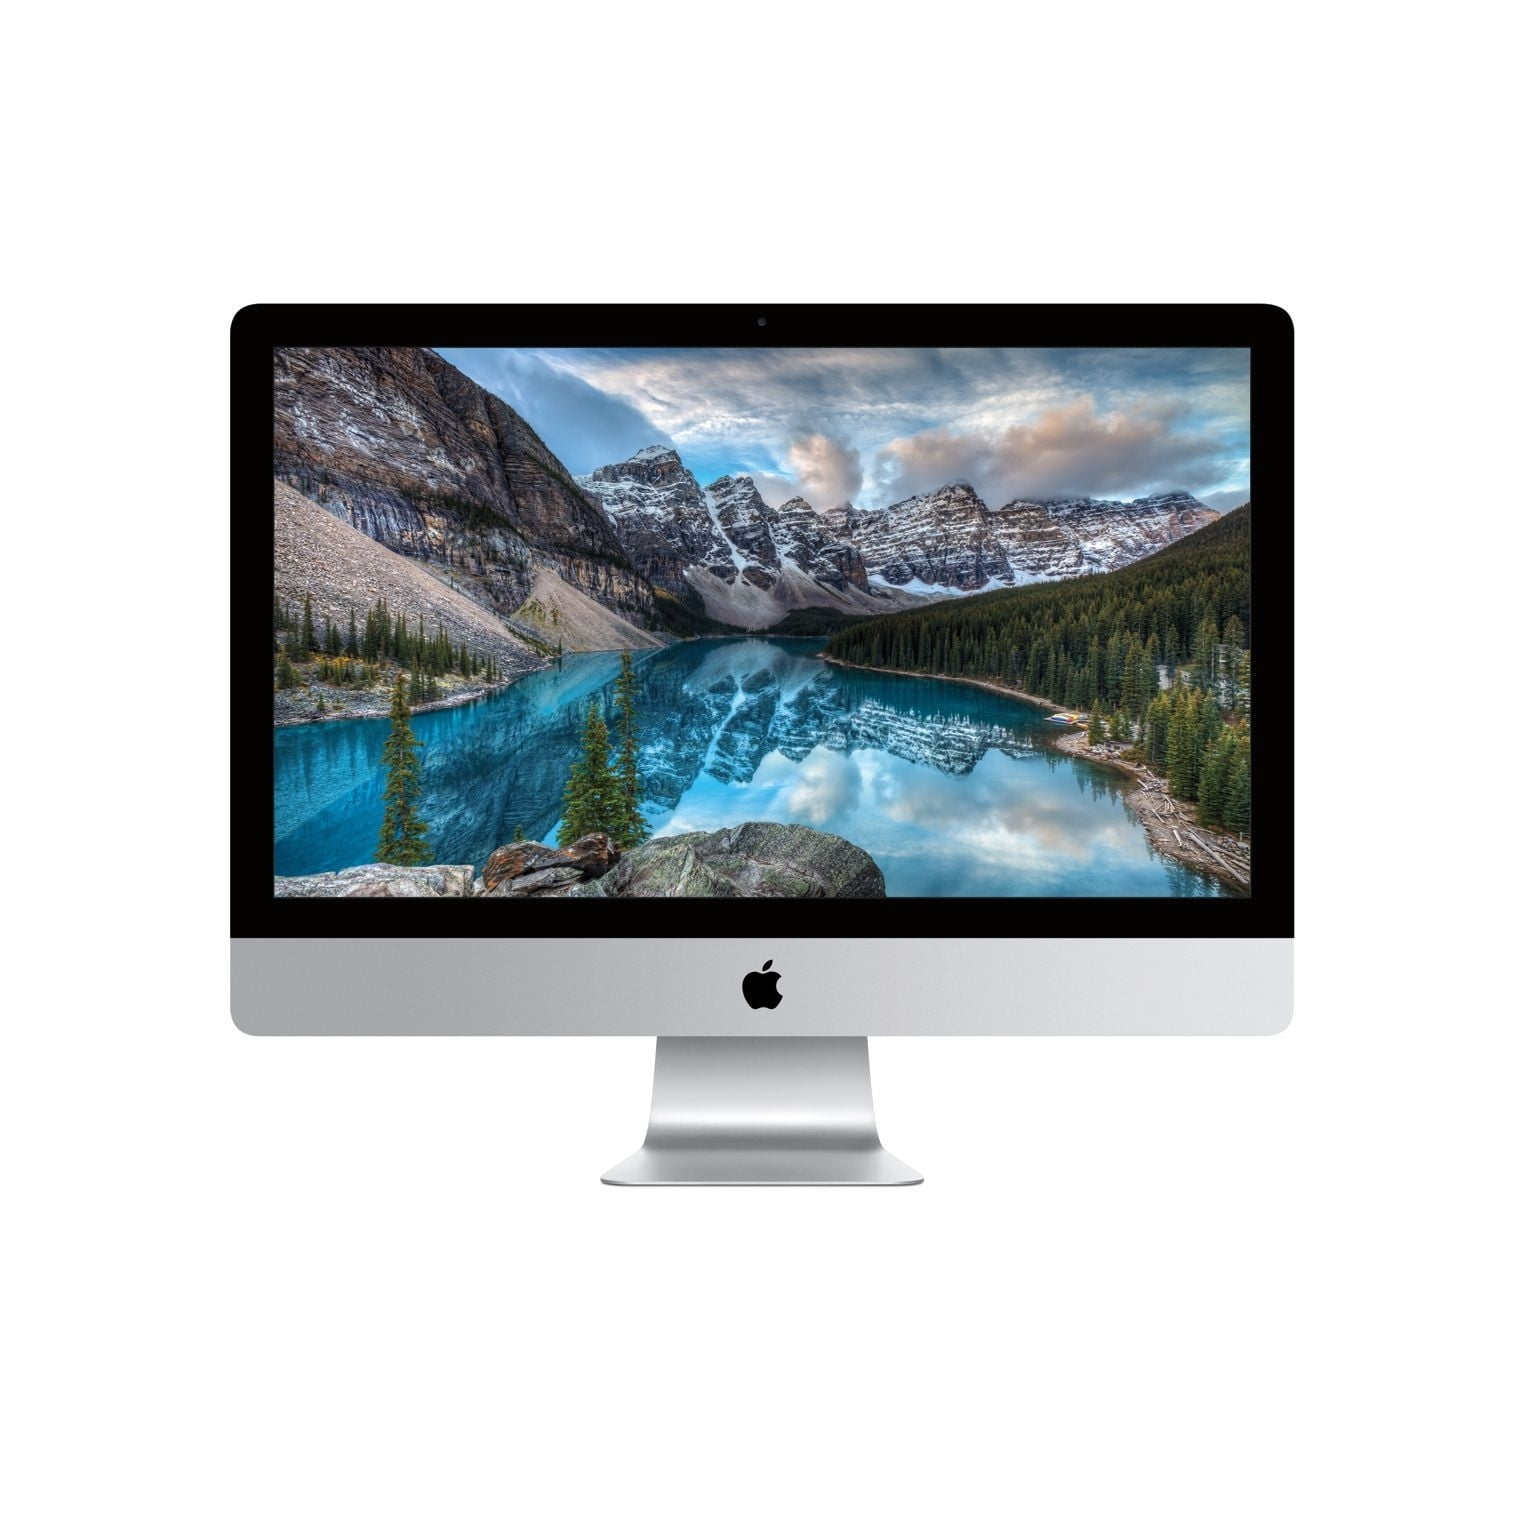 iMac 27" Core i7-870 X4 2.93GHz 8GB 1TB, Silver (Certified Refurbished) - Walmart.com